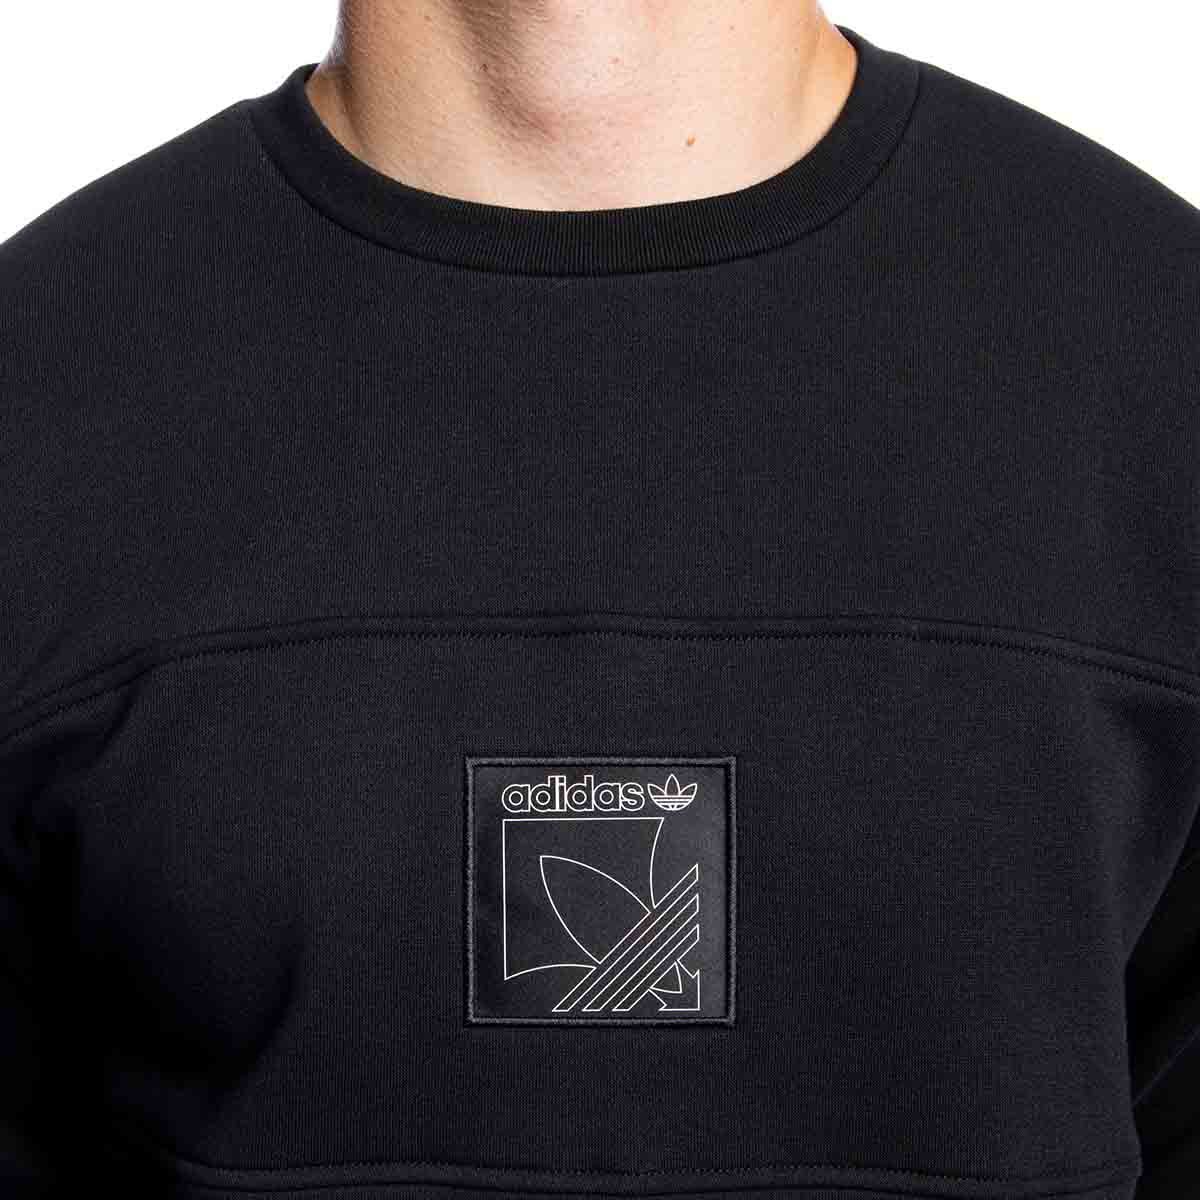 Adidas Originals Sport Icon Crew Sweatshirt black | Bludshop.com